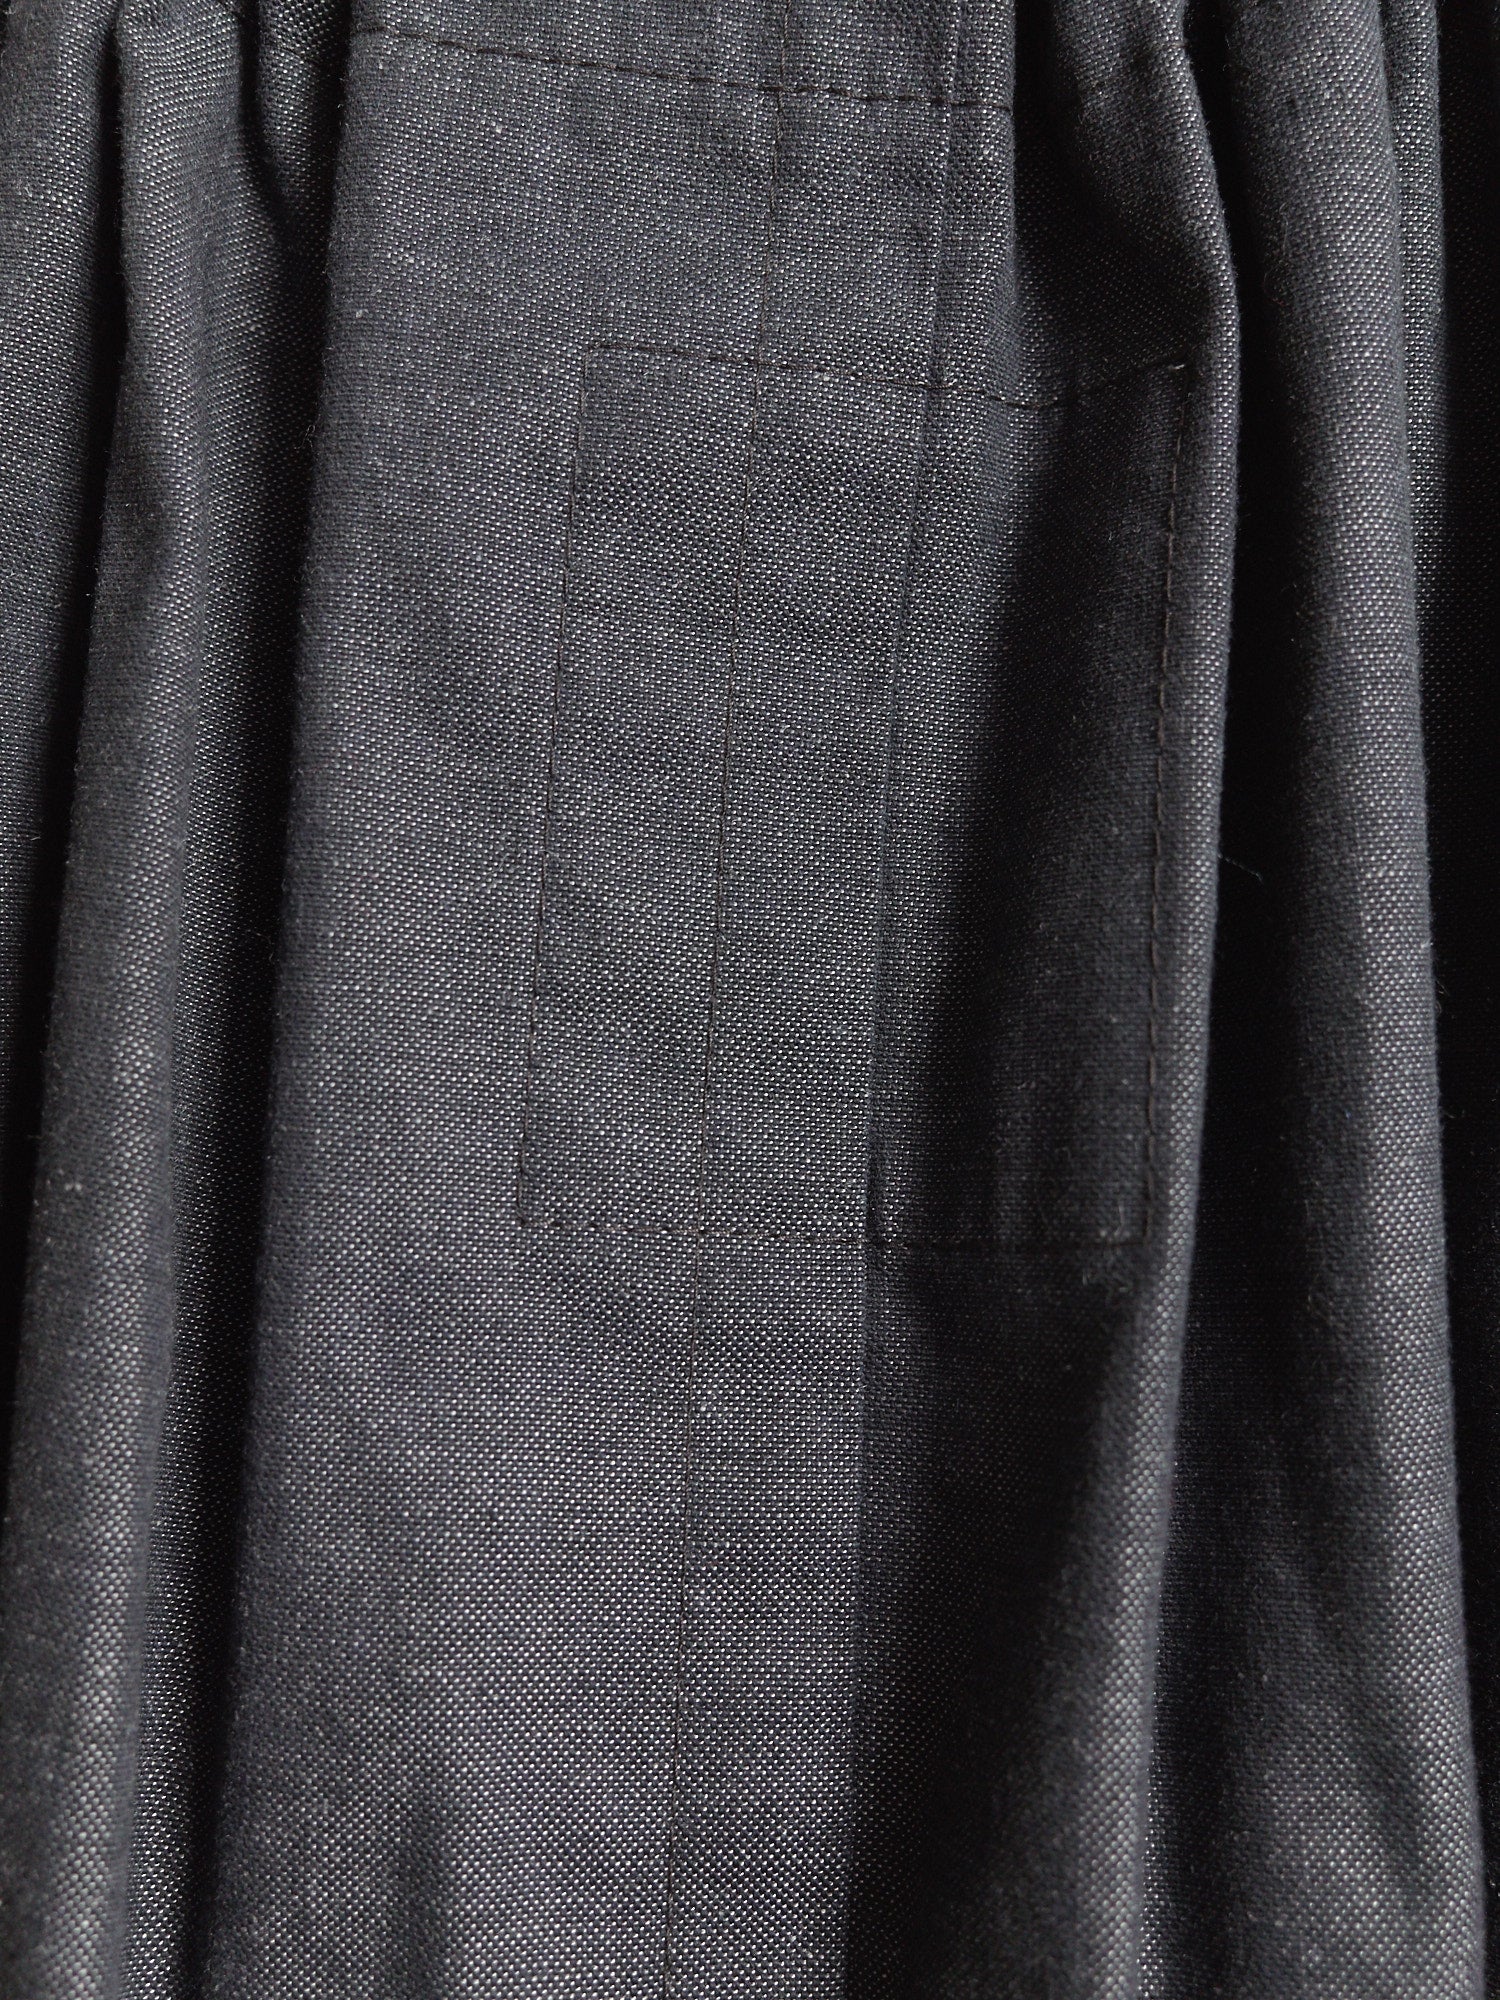 Y’s Yohji Yamamoto grey cotton poly drawstring strap suspender dress - 3 M S